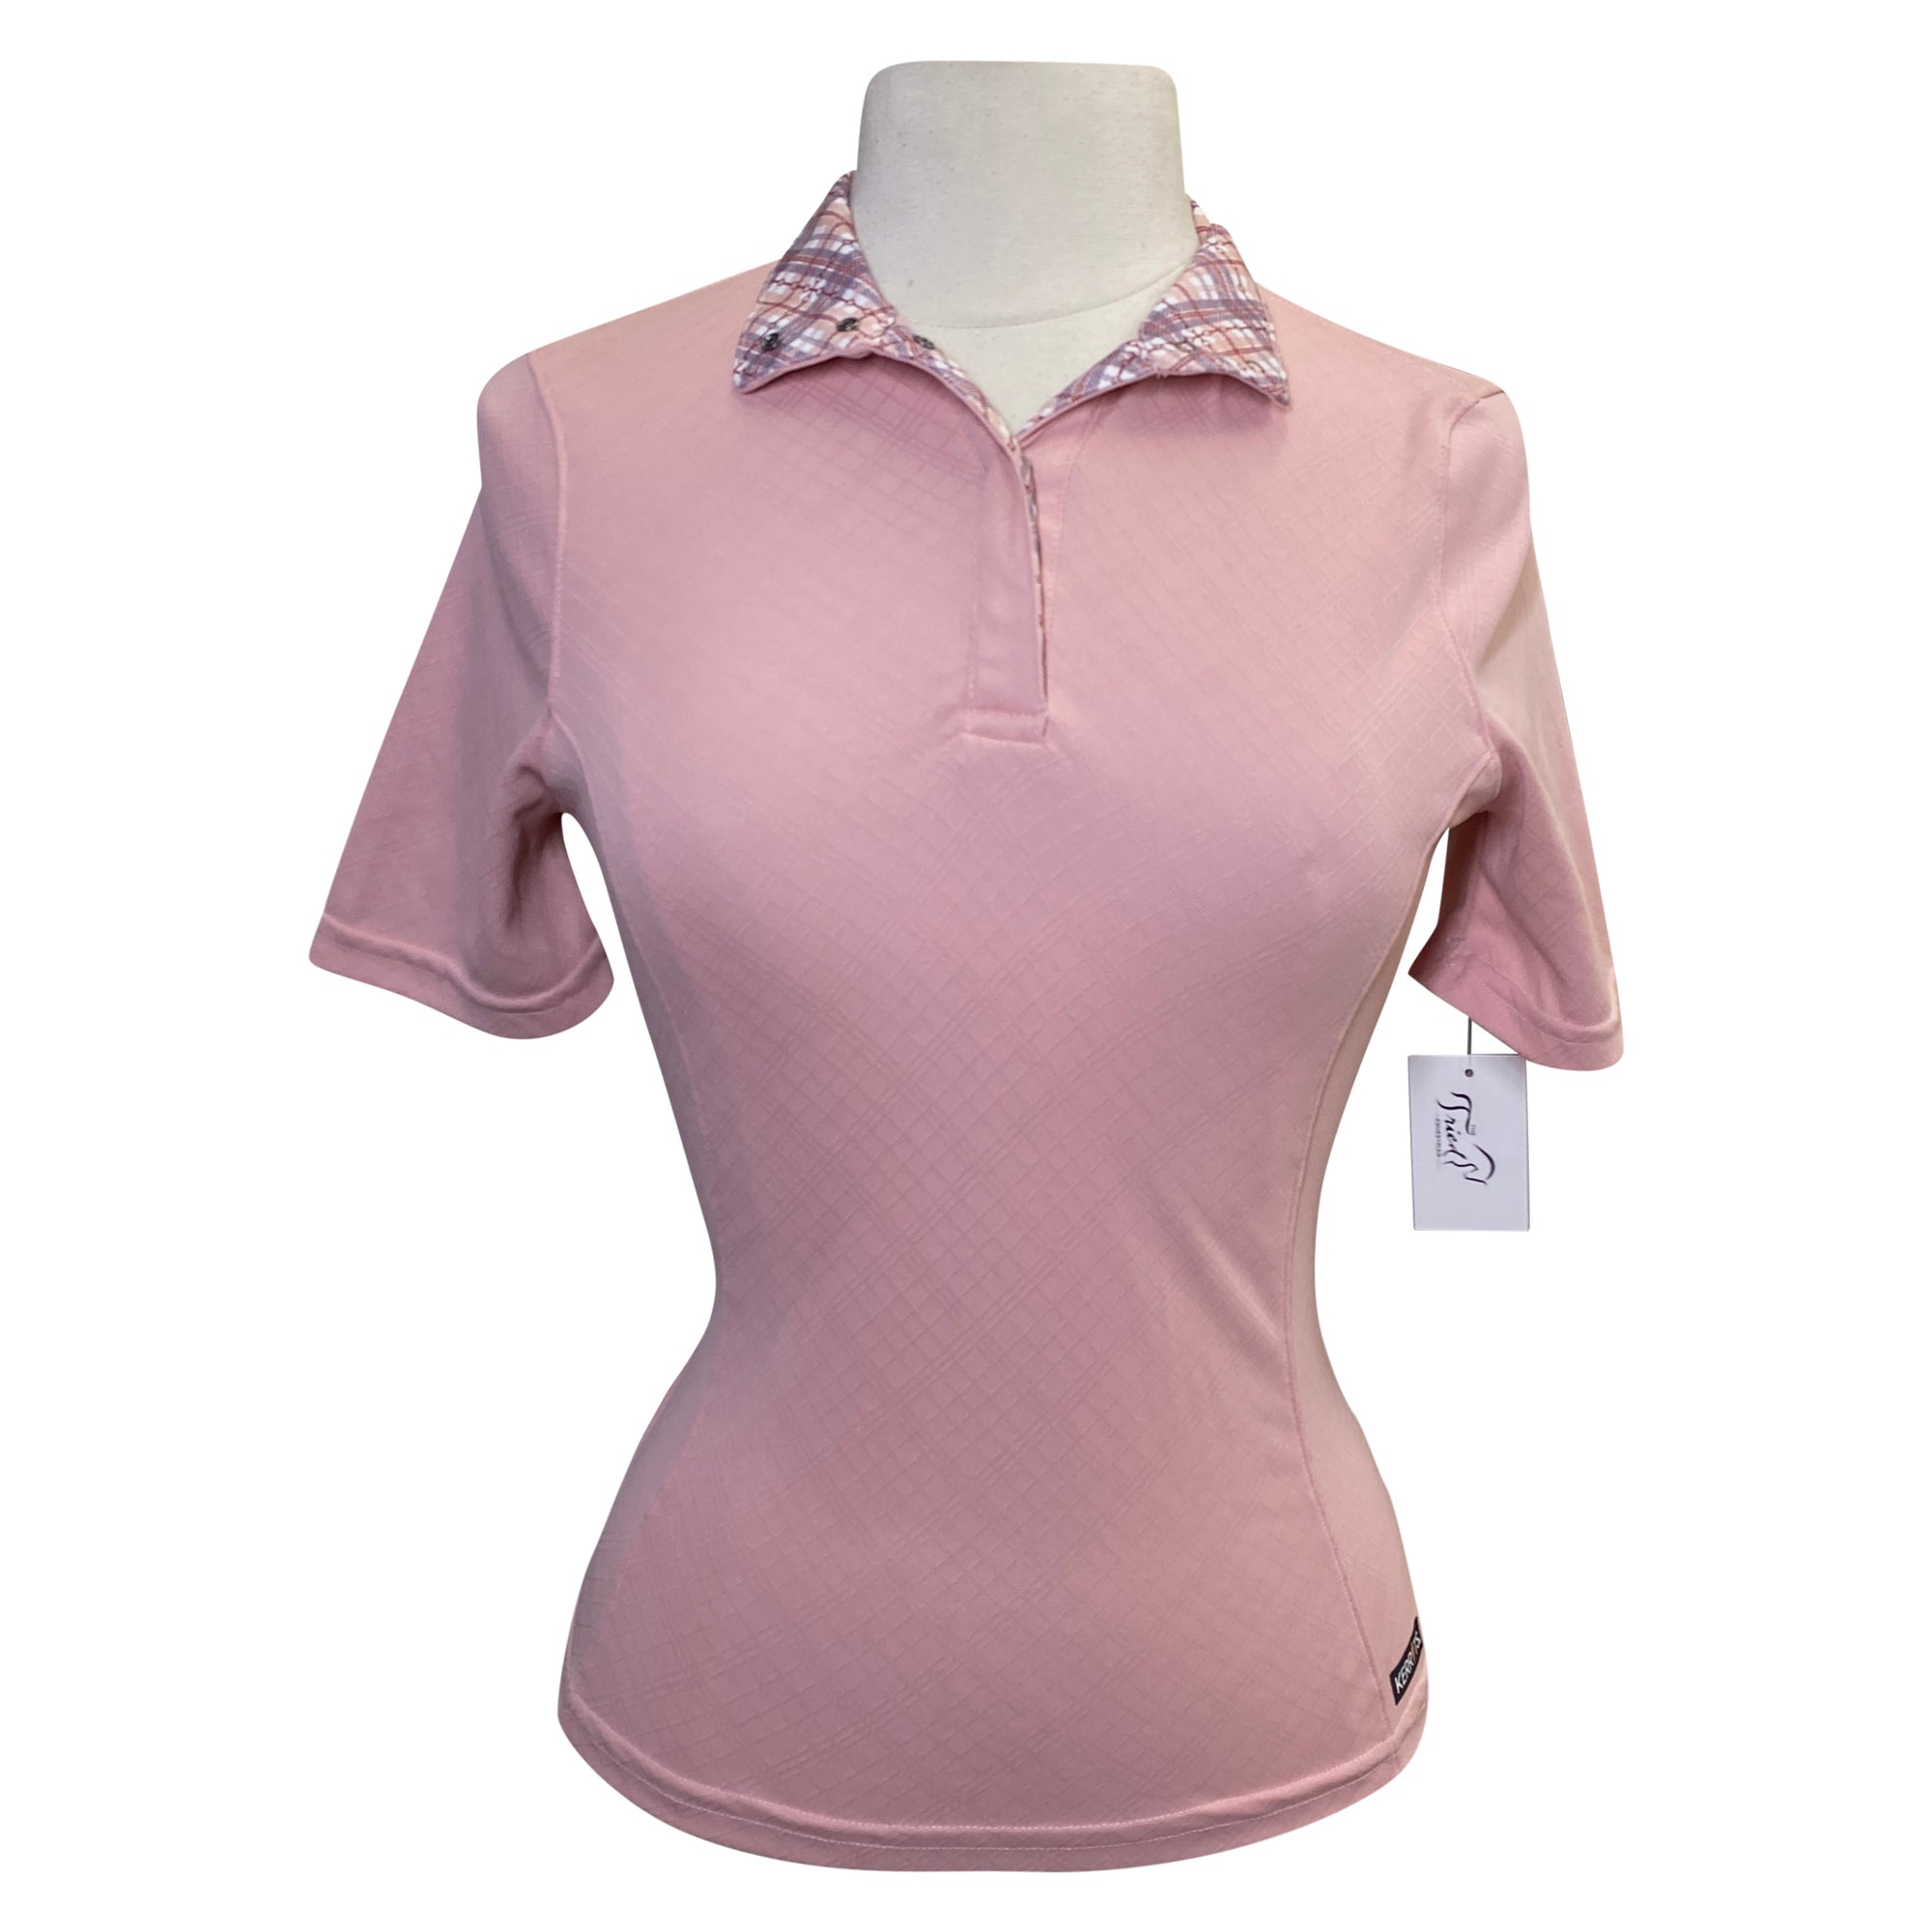 Kerrits Vented Short Sleeve Shirt in Pink